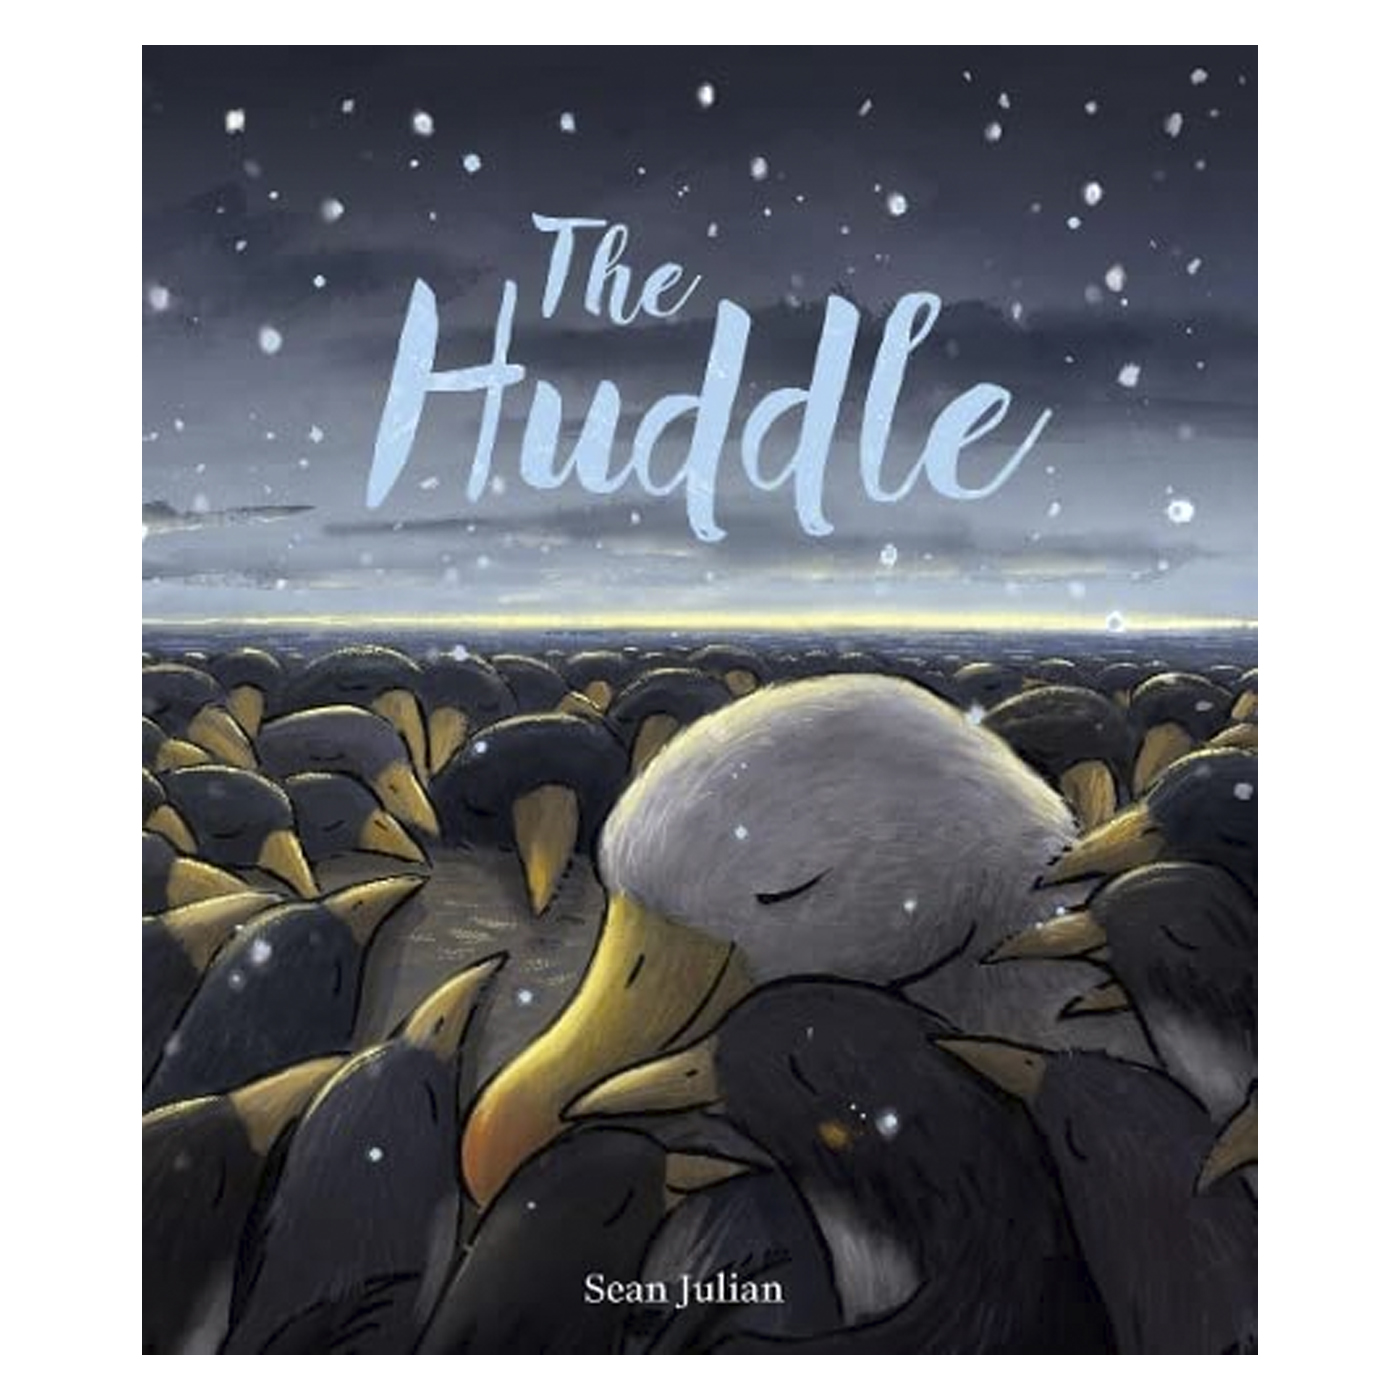  The Huddle